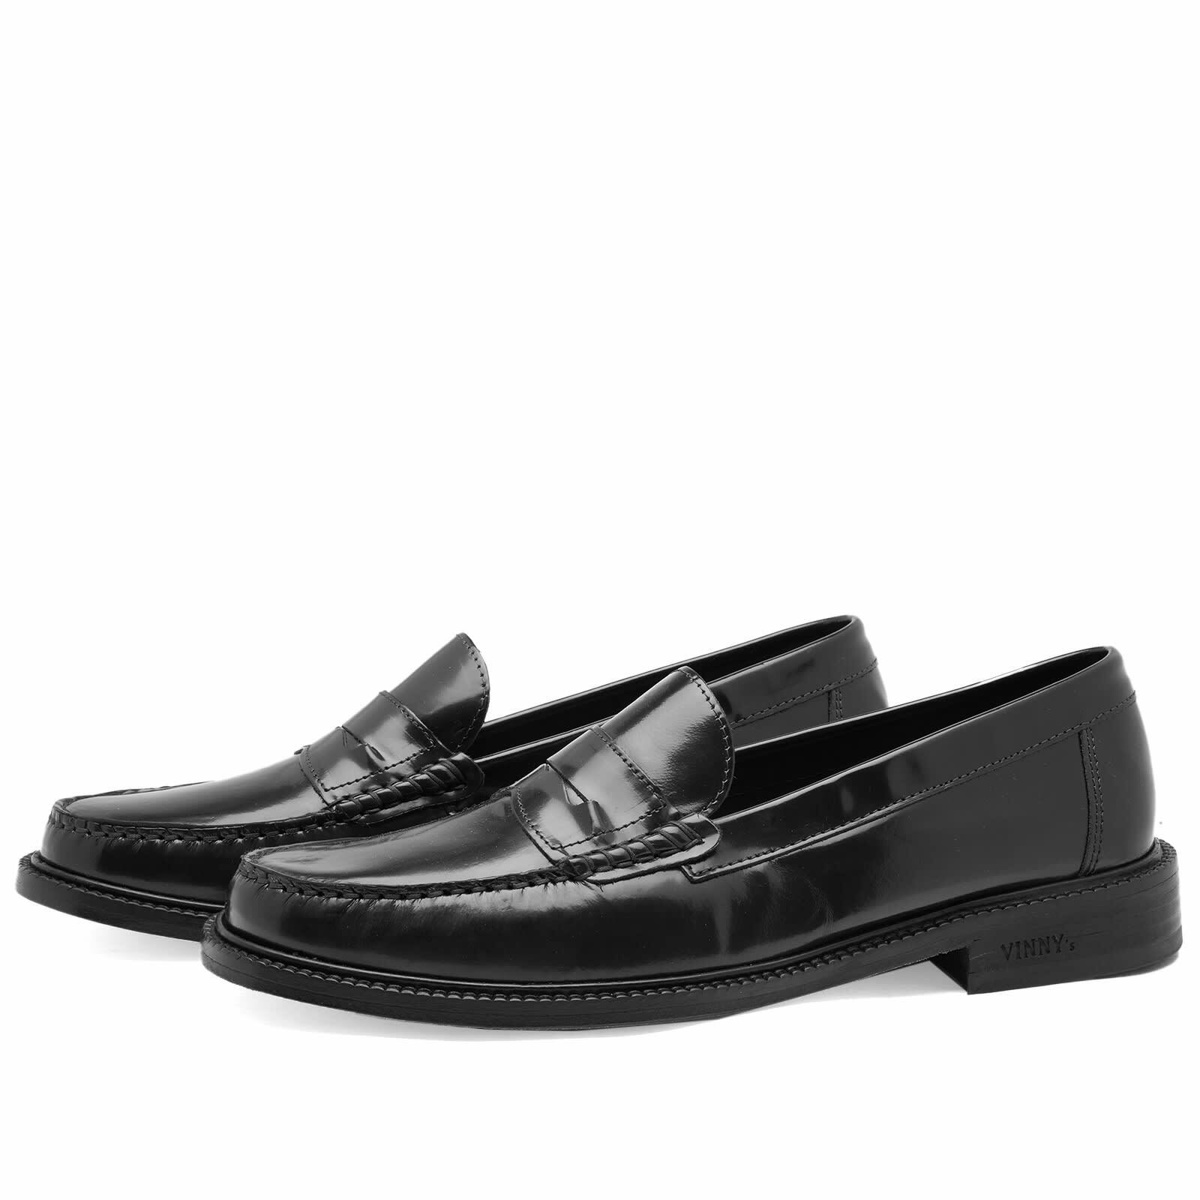 Vinnys Men's VINNY's Yardee Moccasin Loafer in Black Polido Leather VINNYs